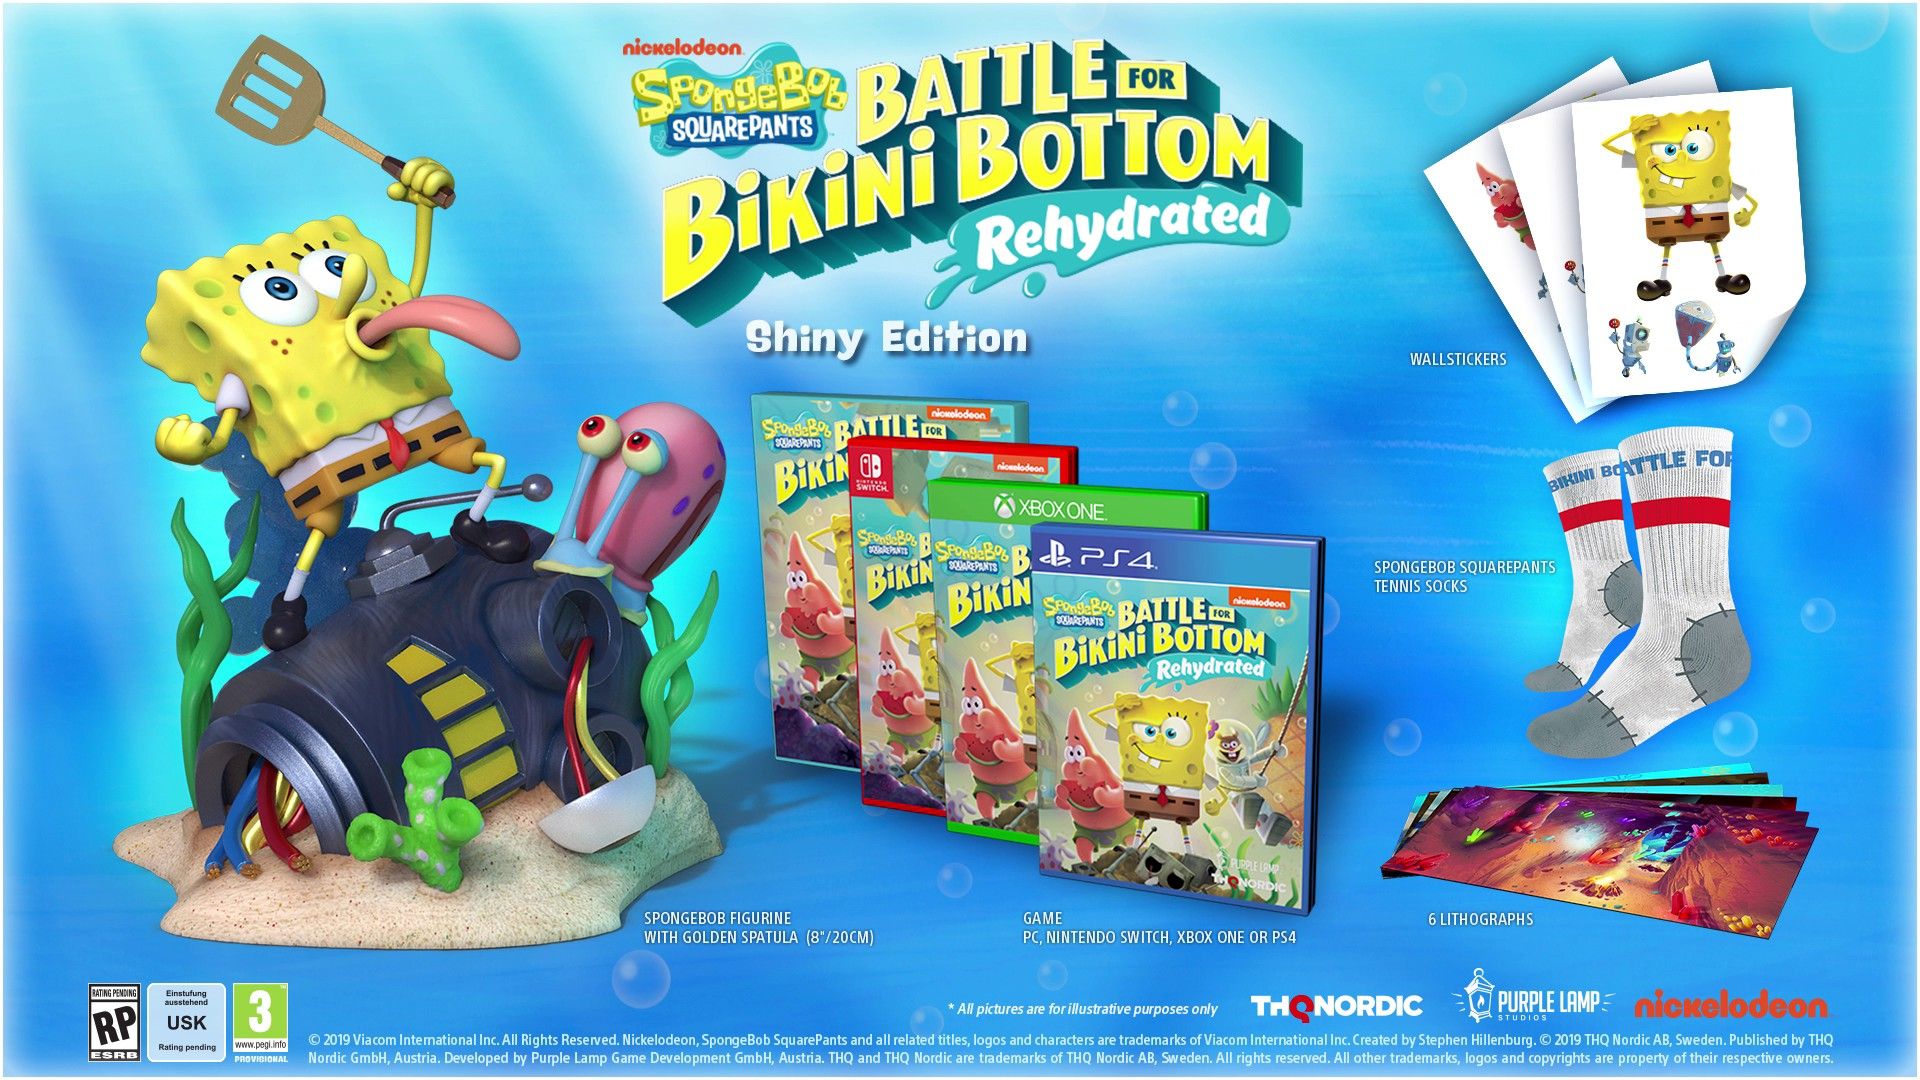 SpongeBob SquarePants: Battle for Bikini Bottom special editions announced